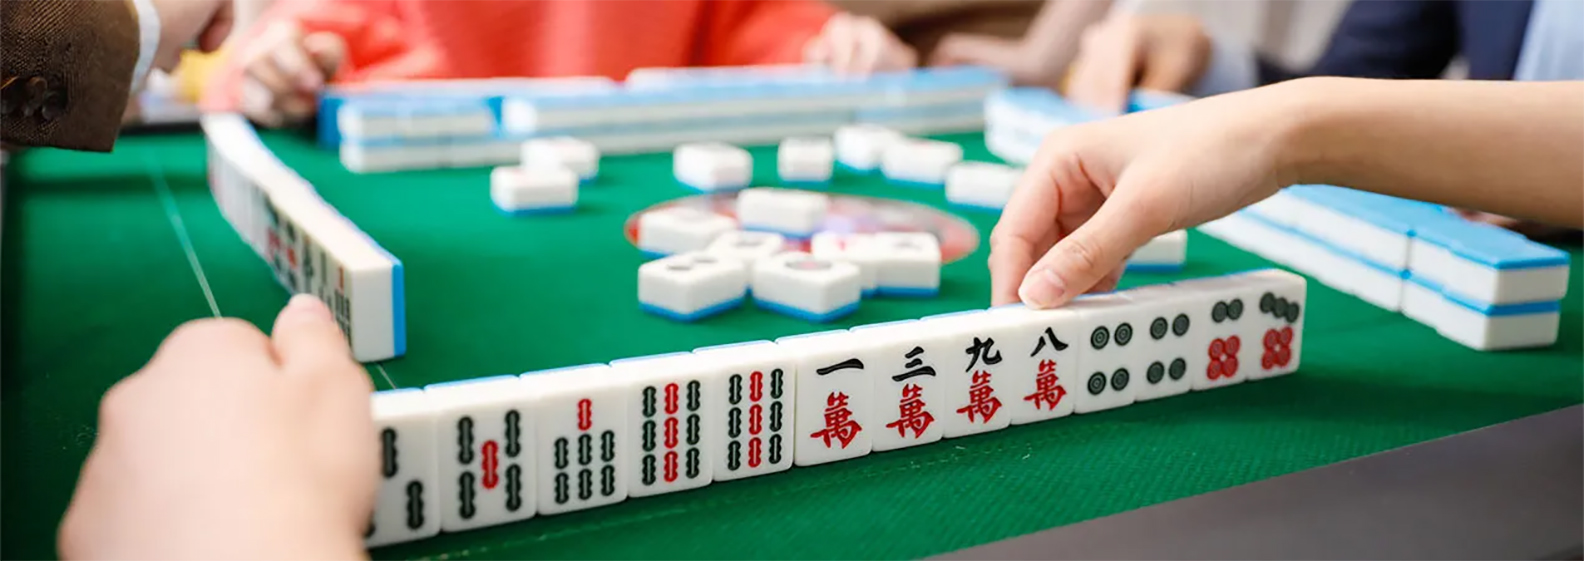 Mahjong tiles set up on a rack during play.